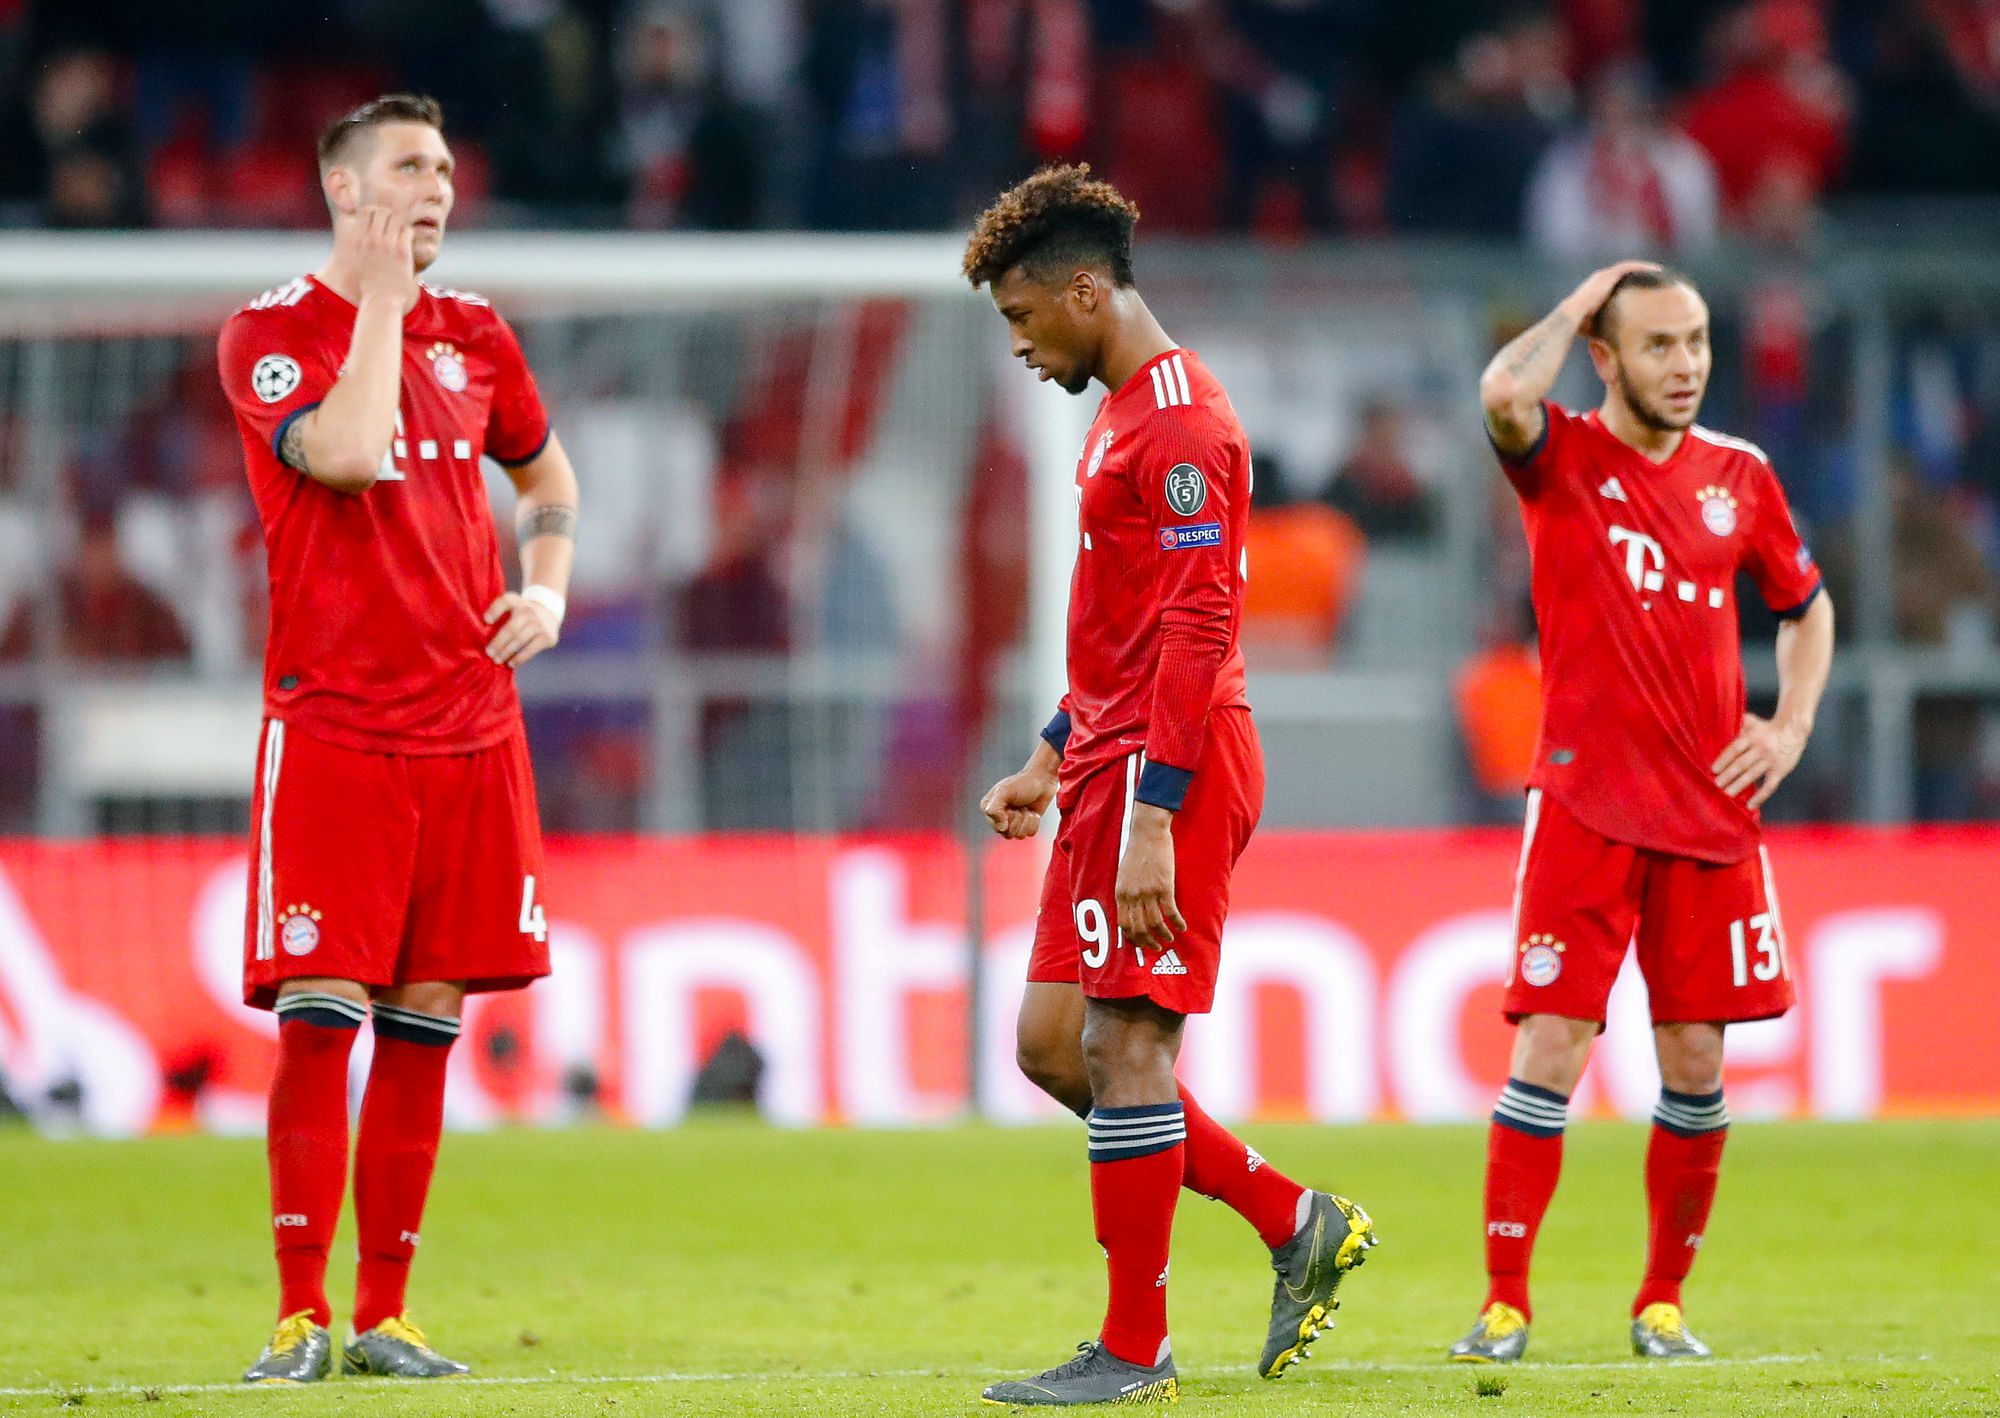 Bayern Munich’s Decline Laid Bare by Liverpool